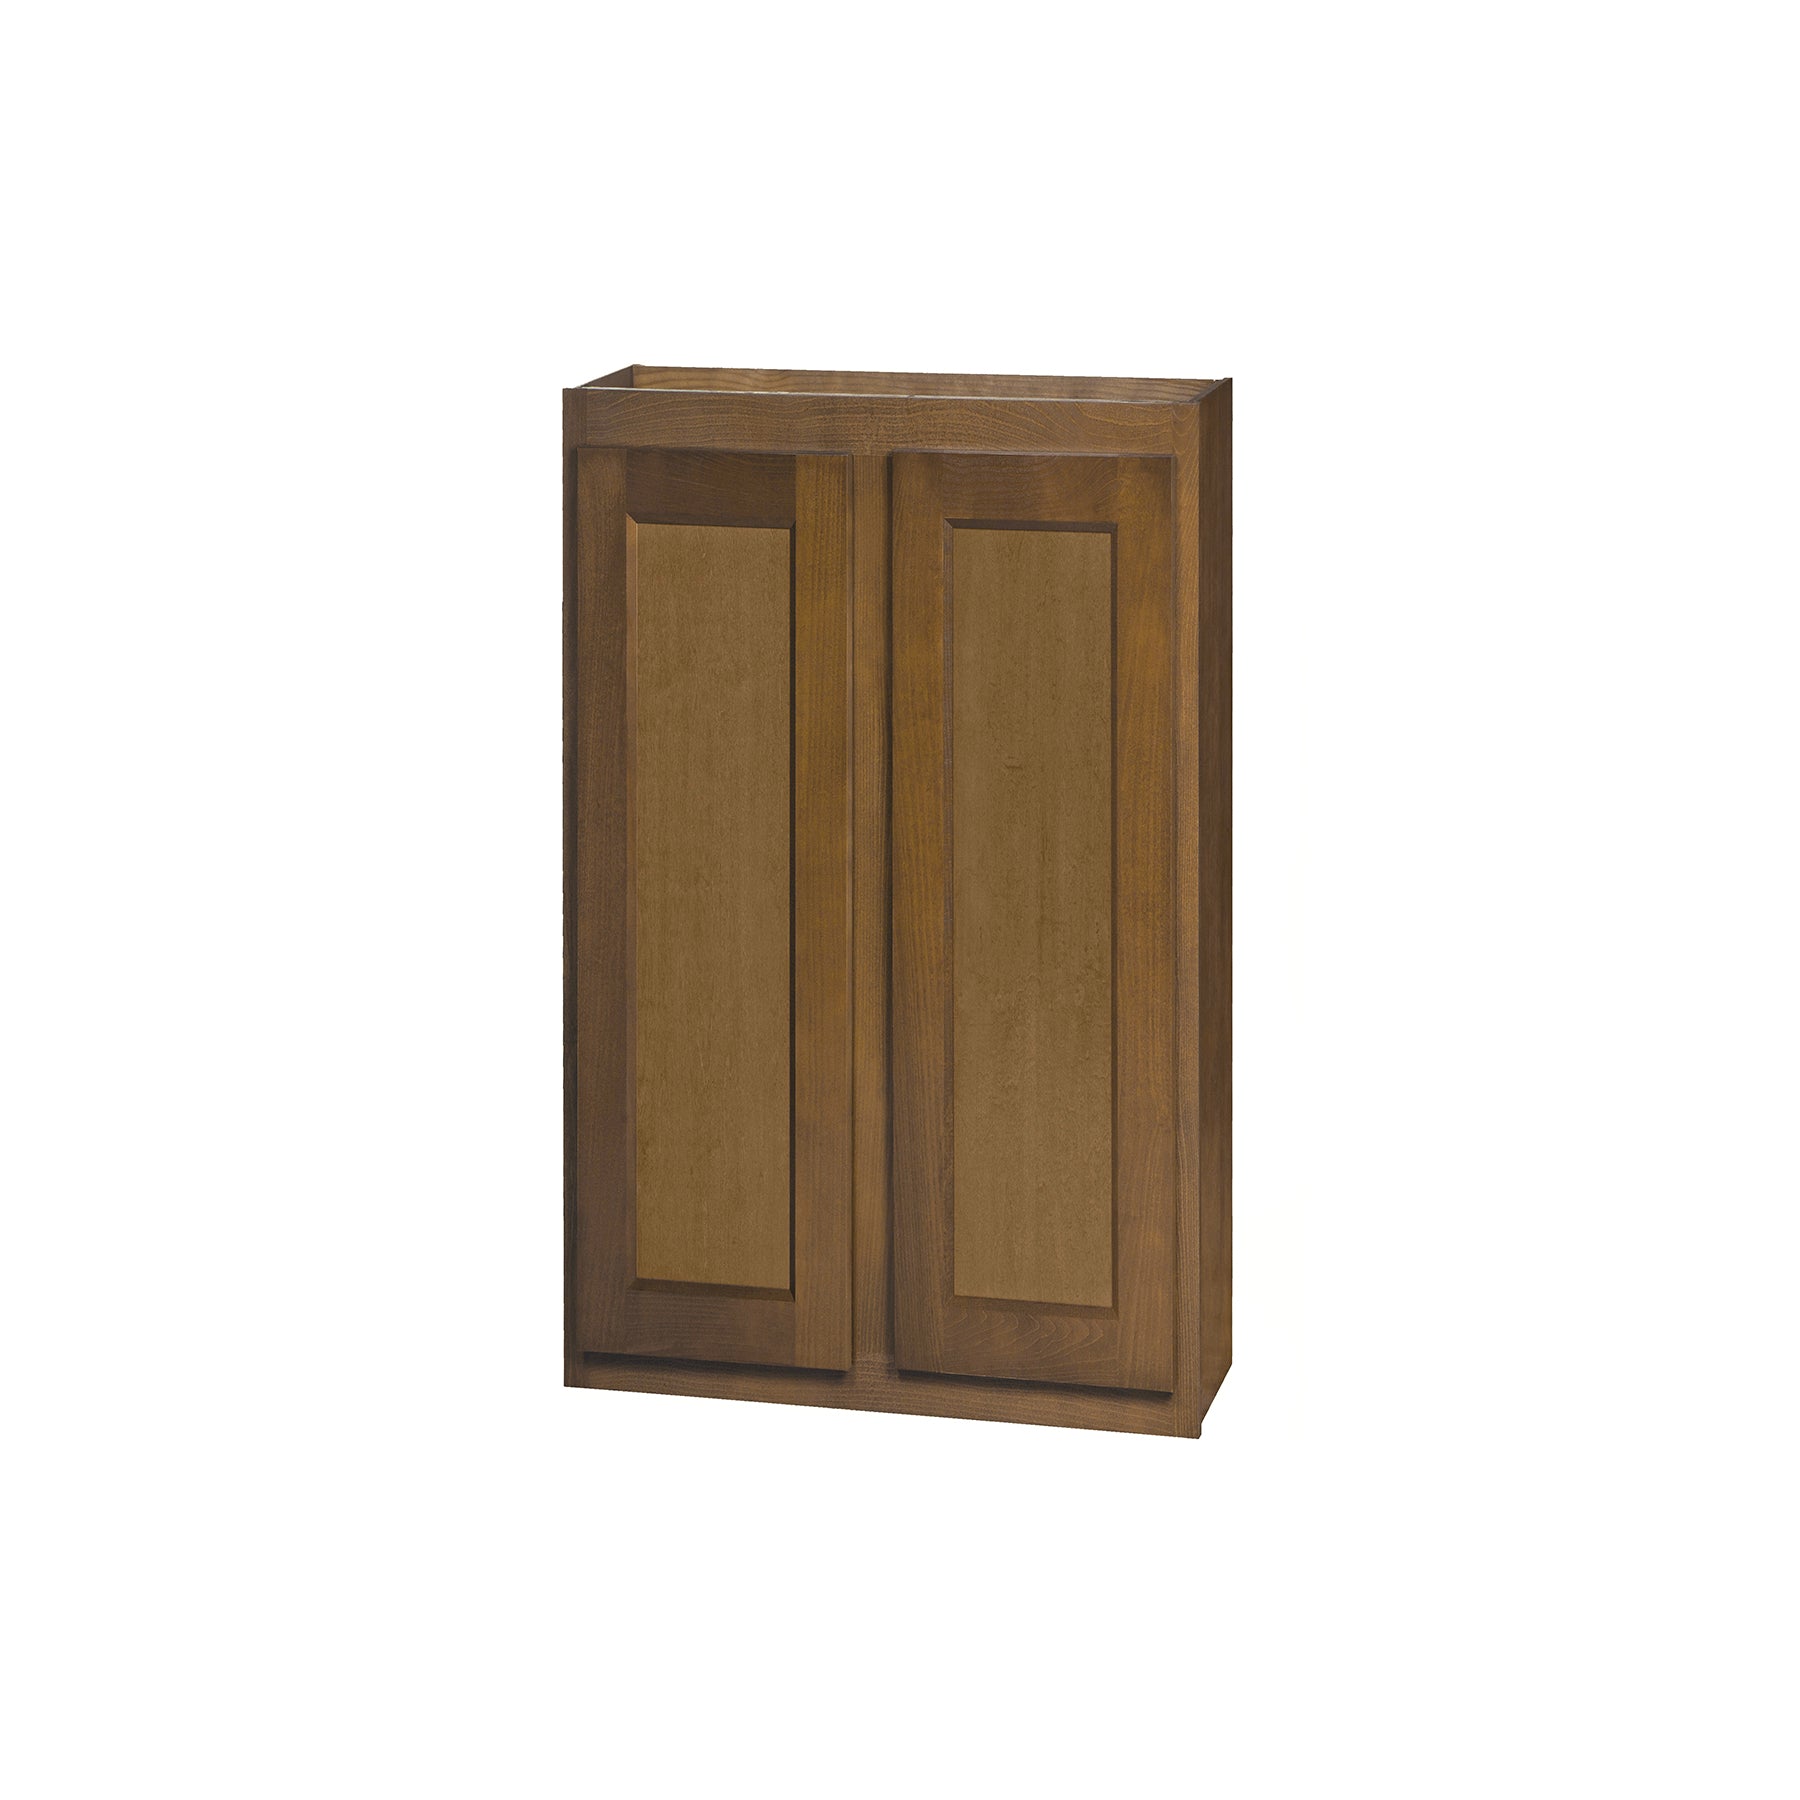 36 inch Wall Cabinets - Warmwood Shaker - 27 Inch W x 36 Inch H x 12 Inch D